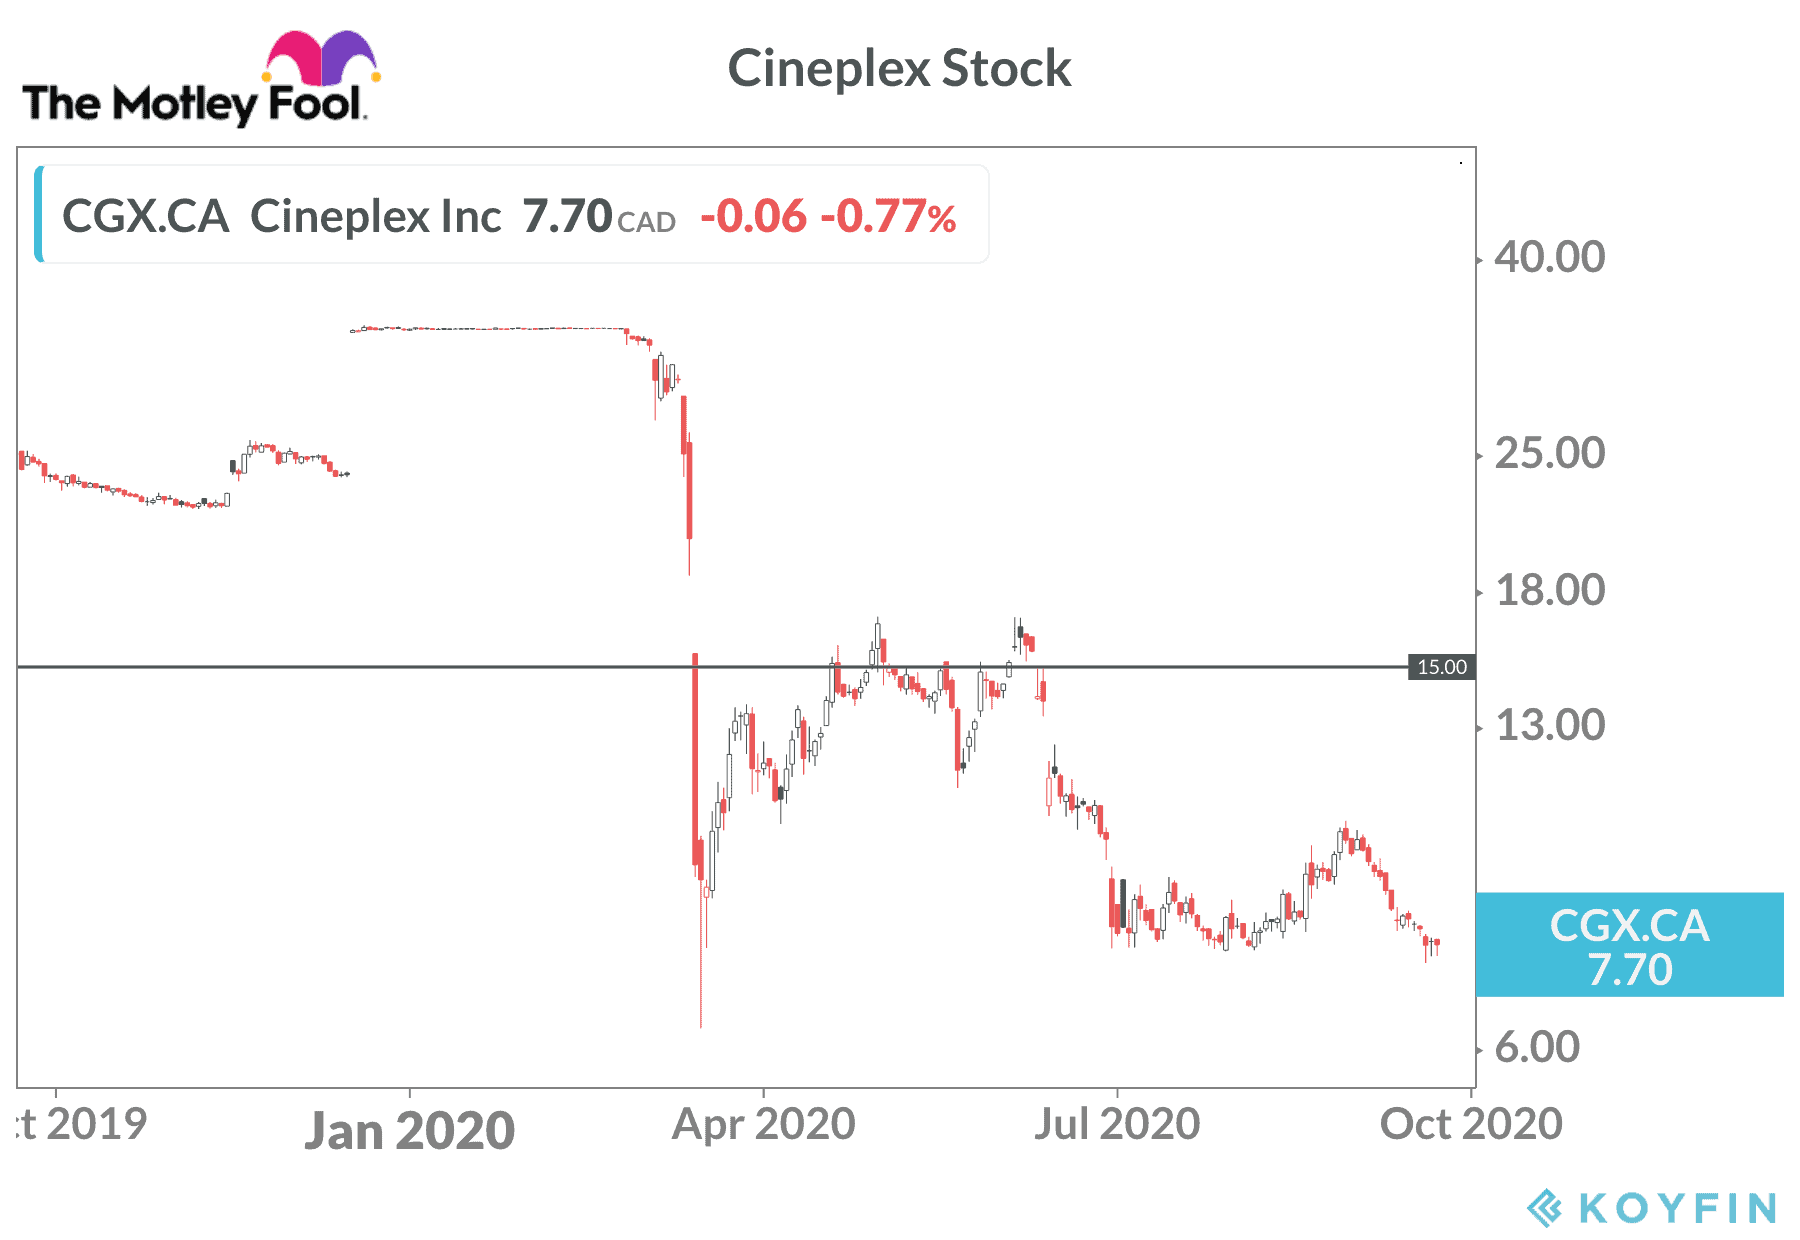 Cineplex stock